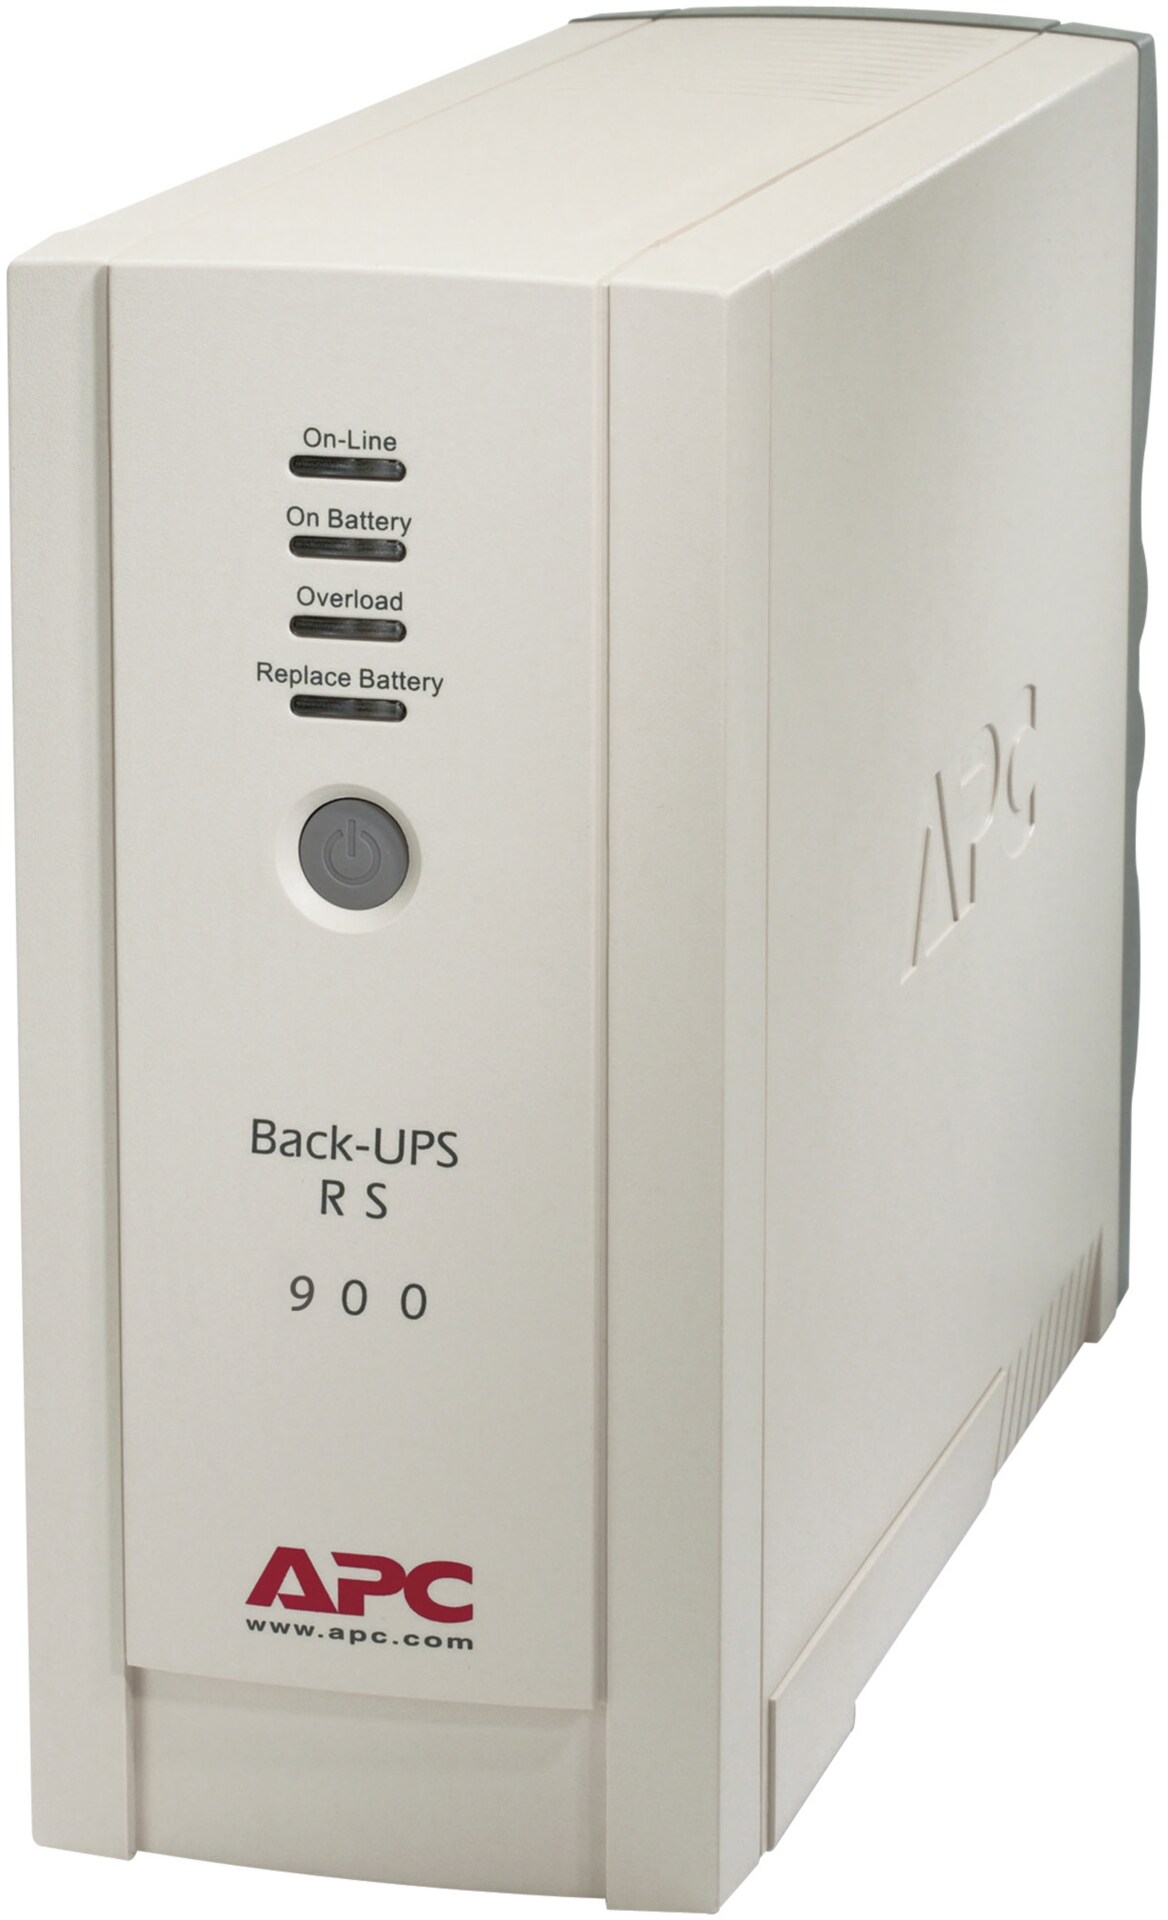 APC 900VA Back-UPS RS 900 (Exclusive Pricing thru (6/30/10)